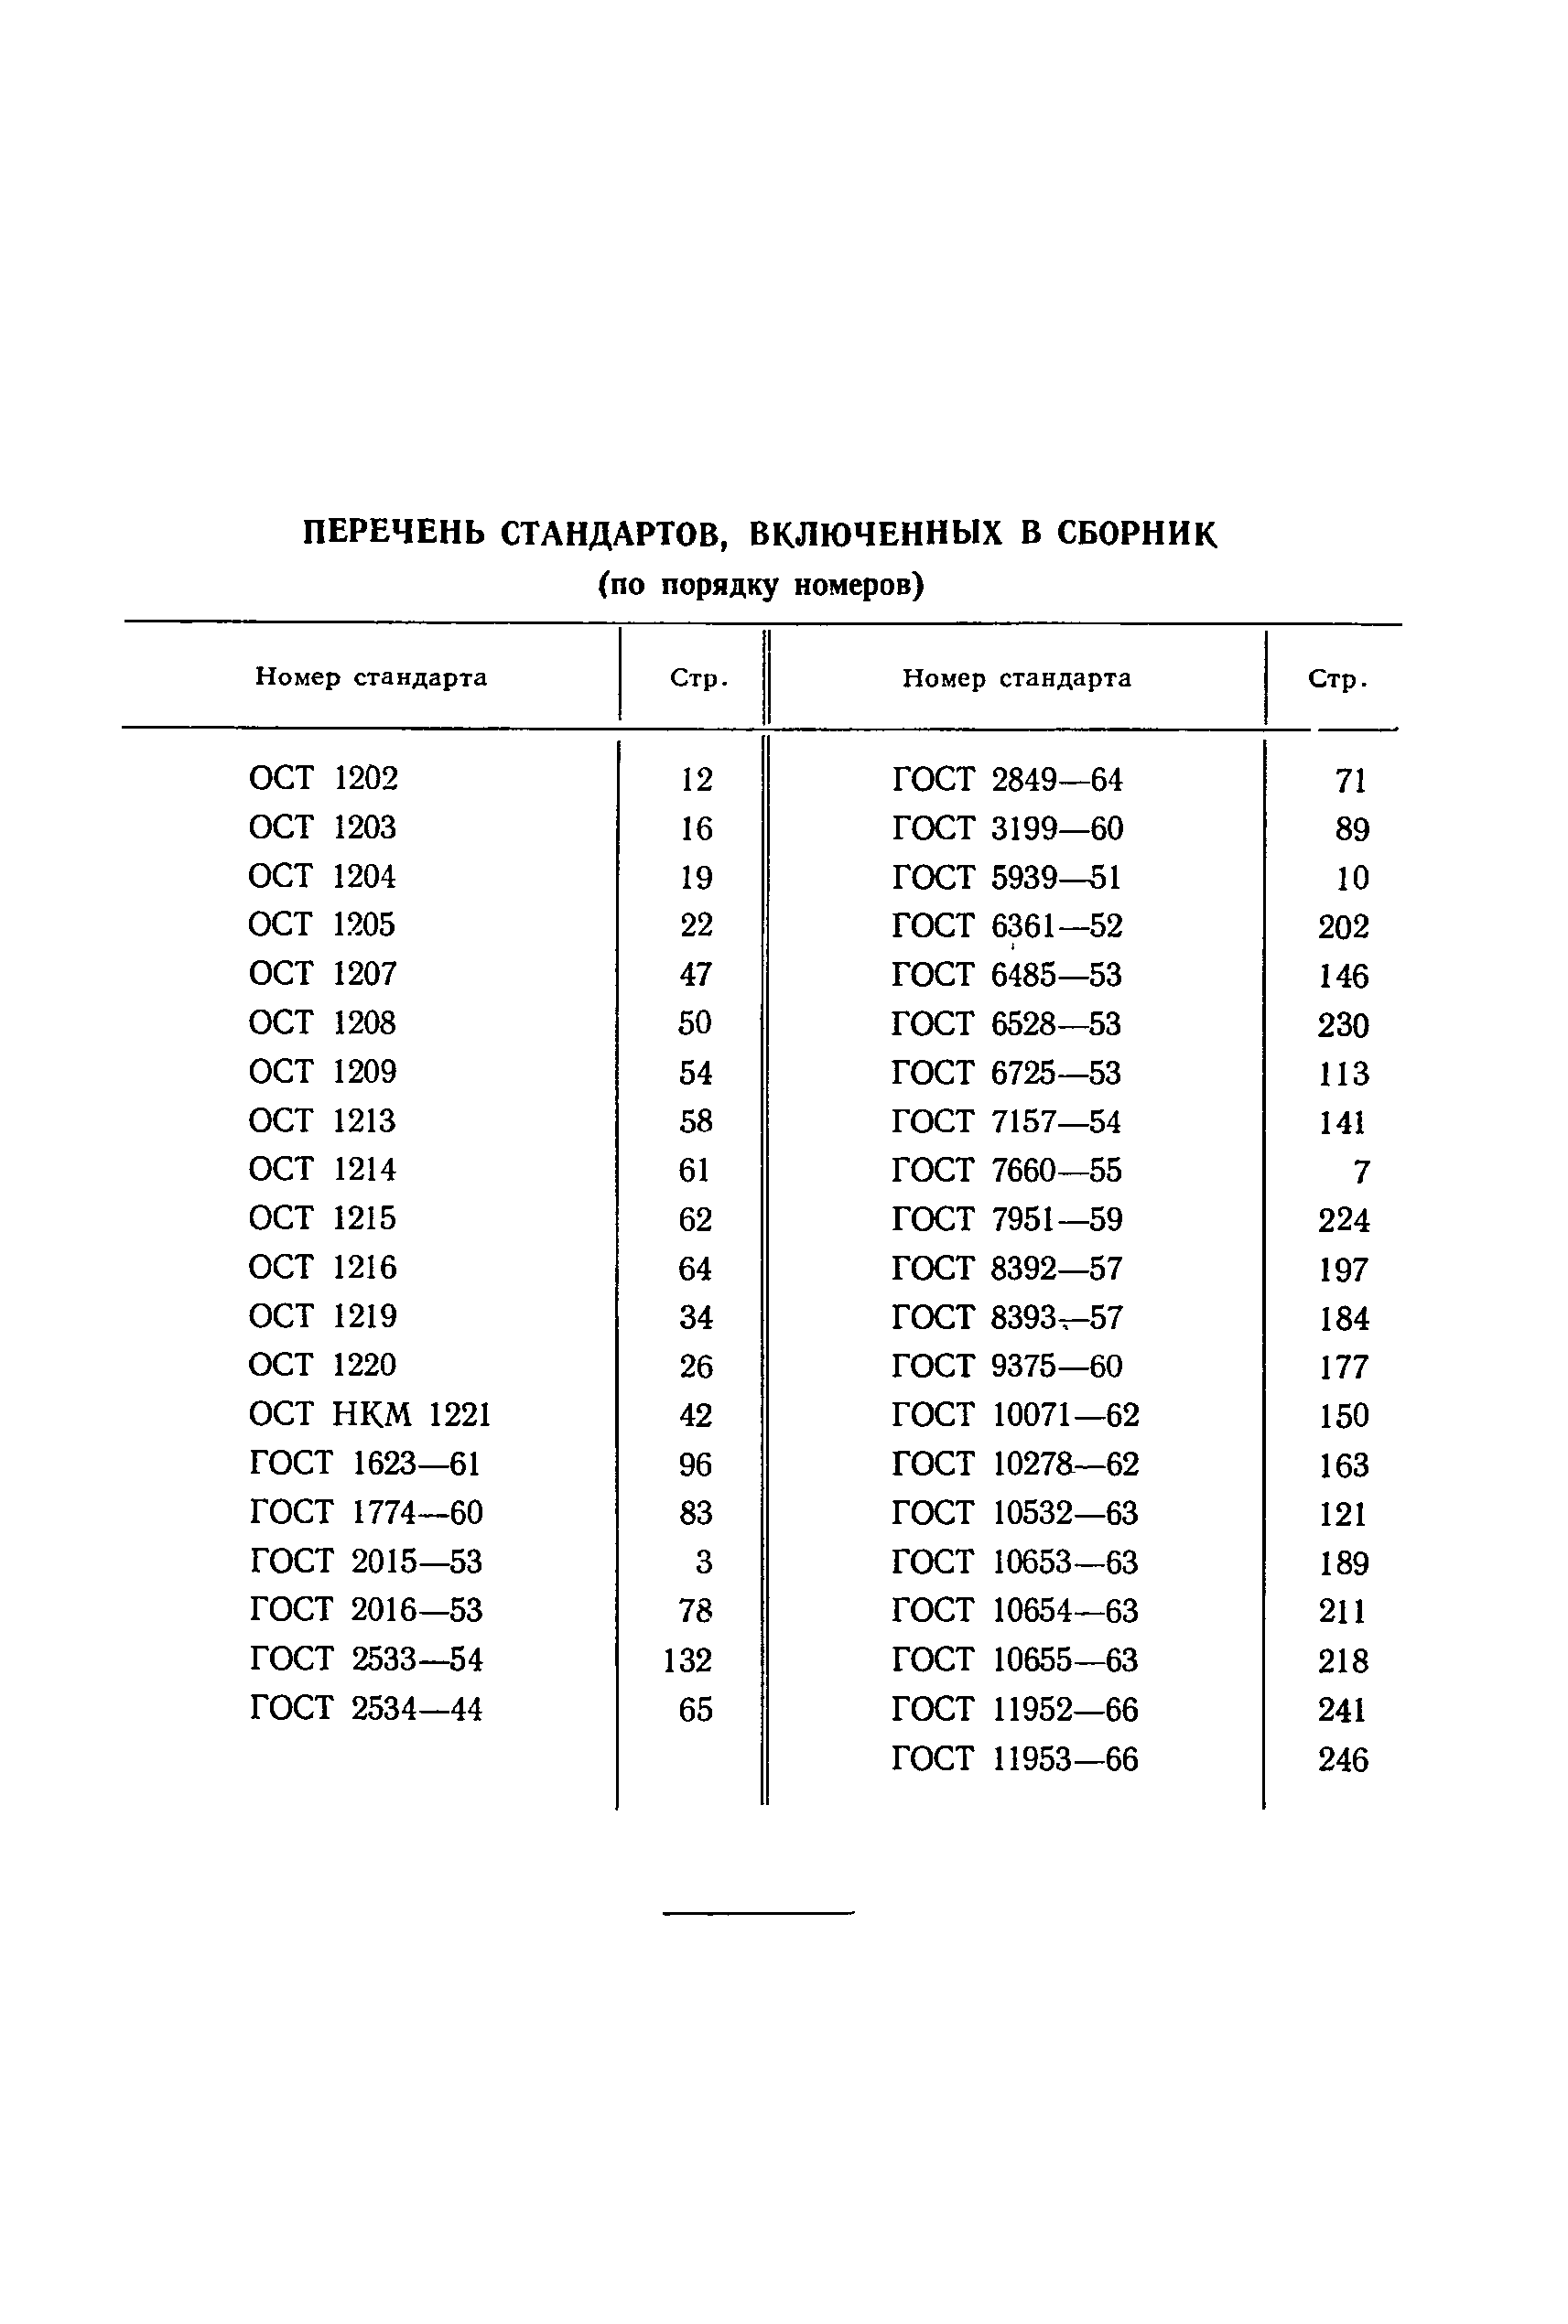 ГОСТ 10653-63